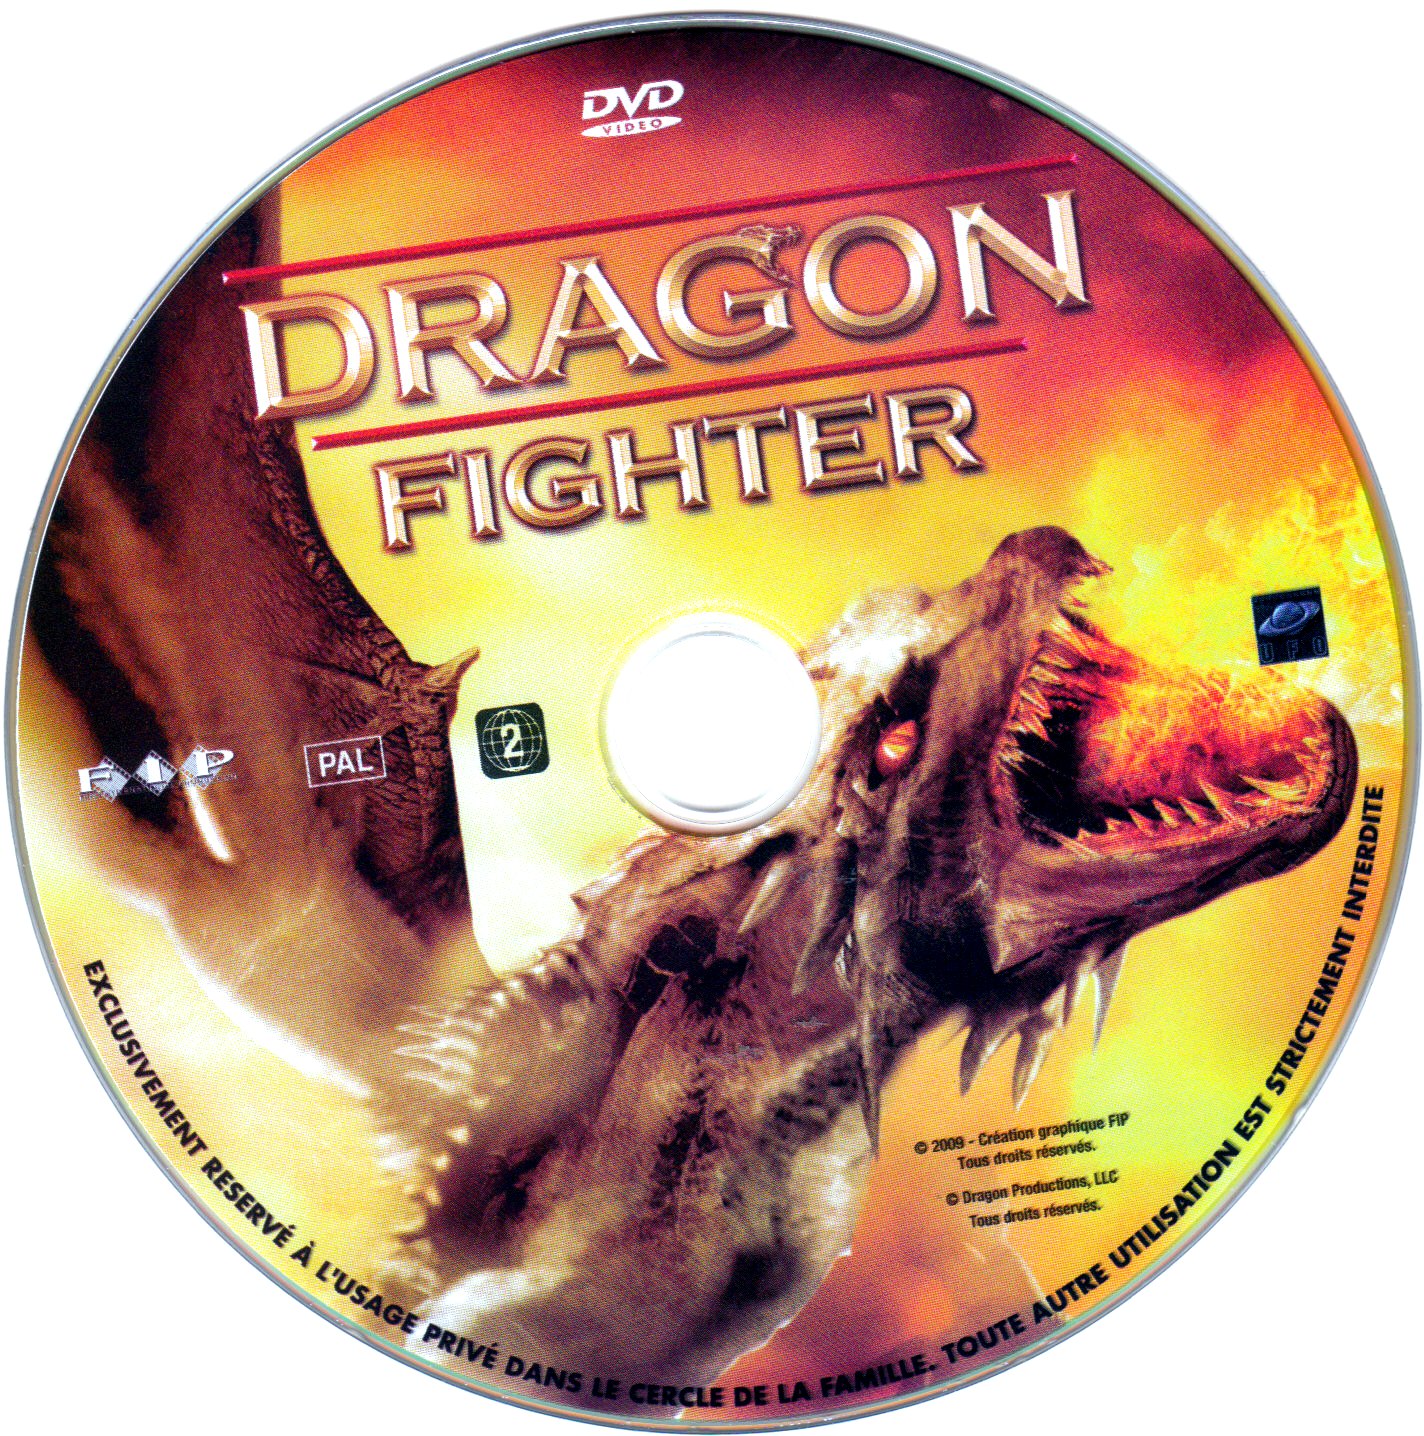 Dragon fighter